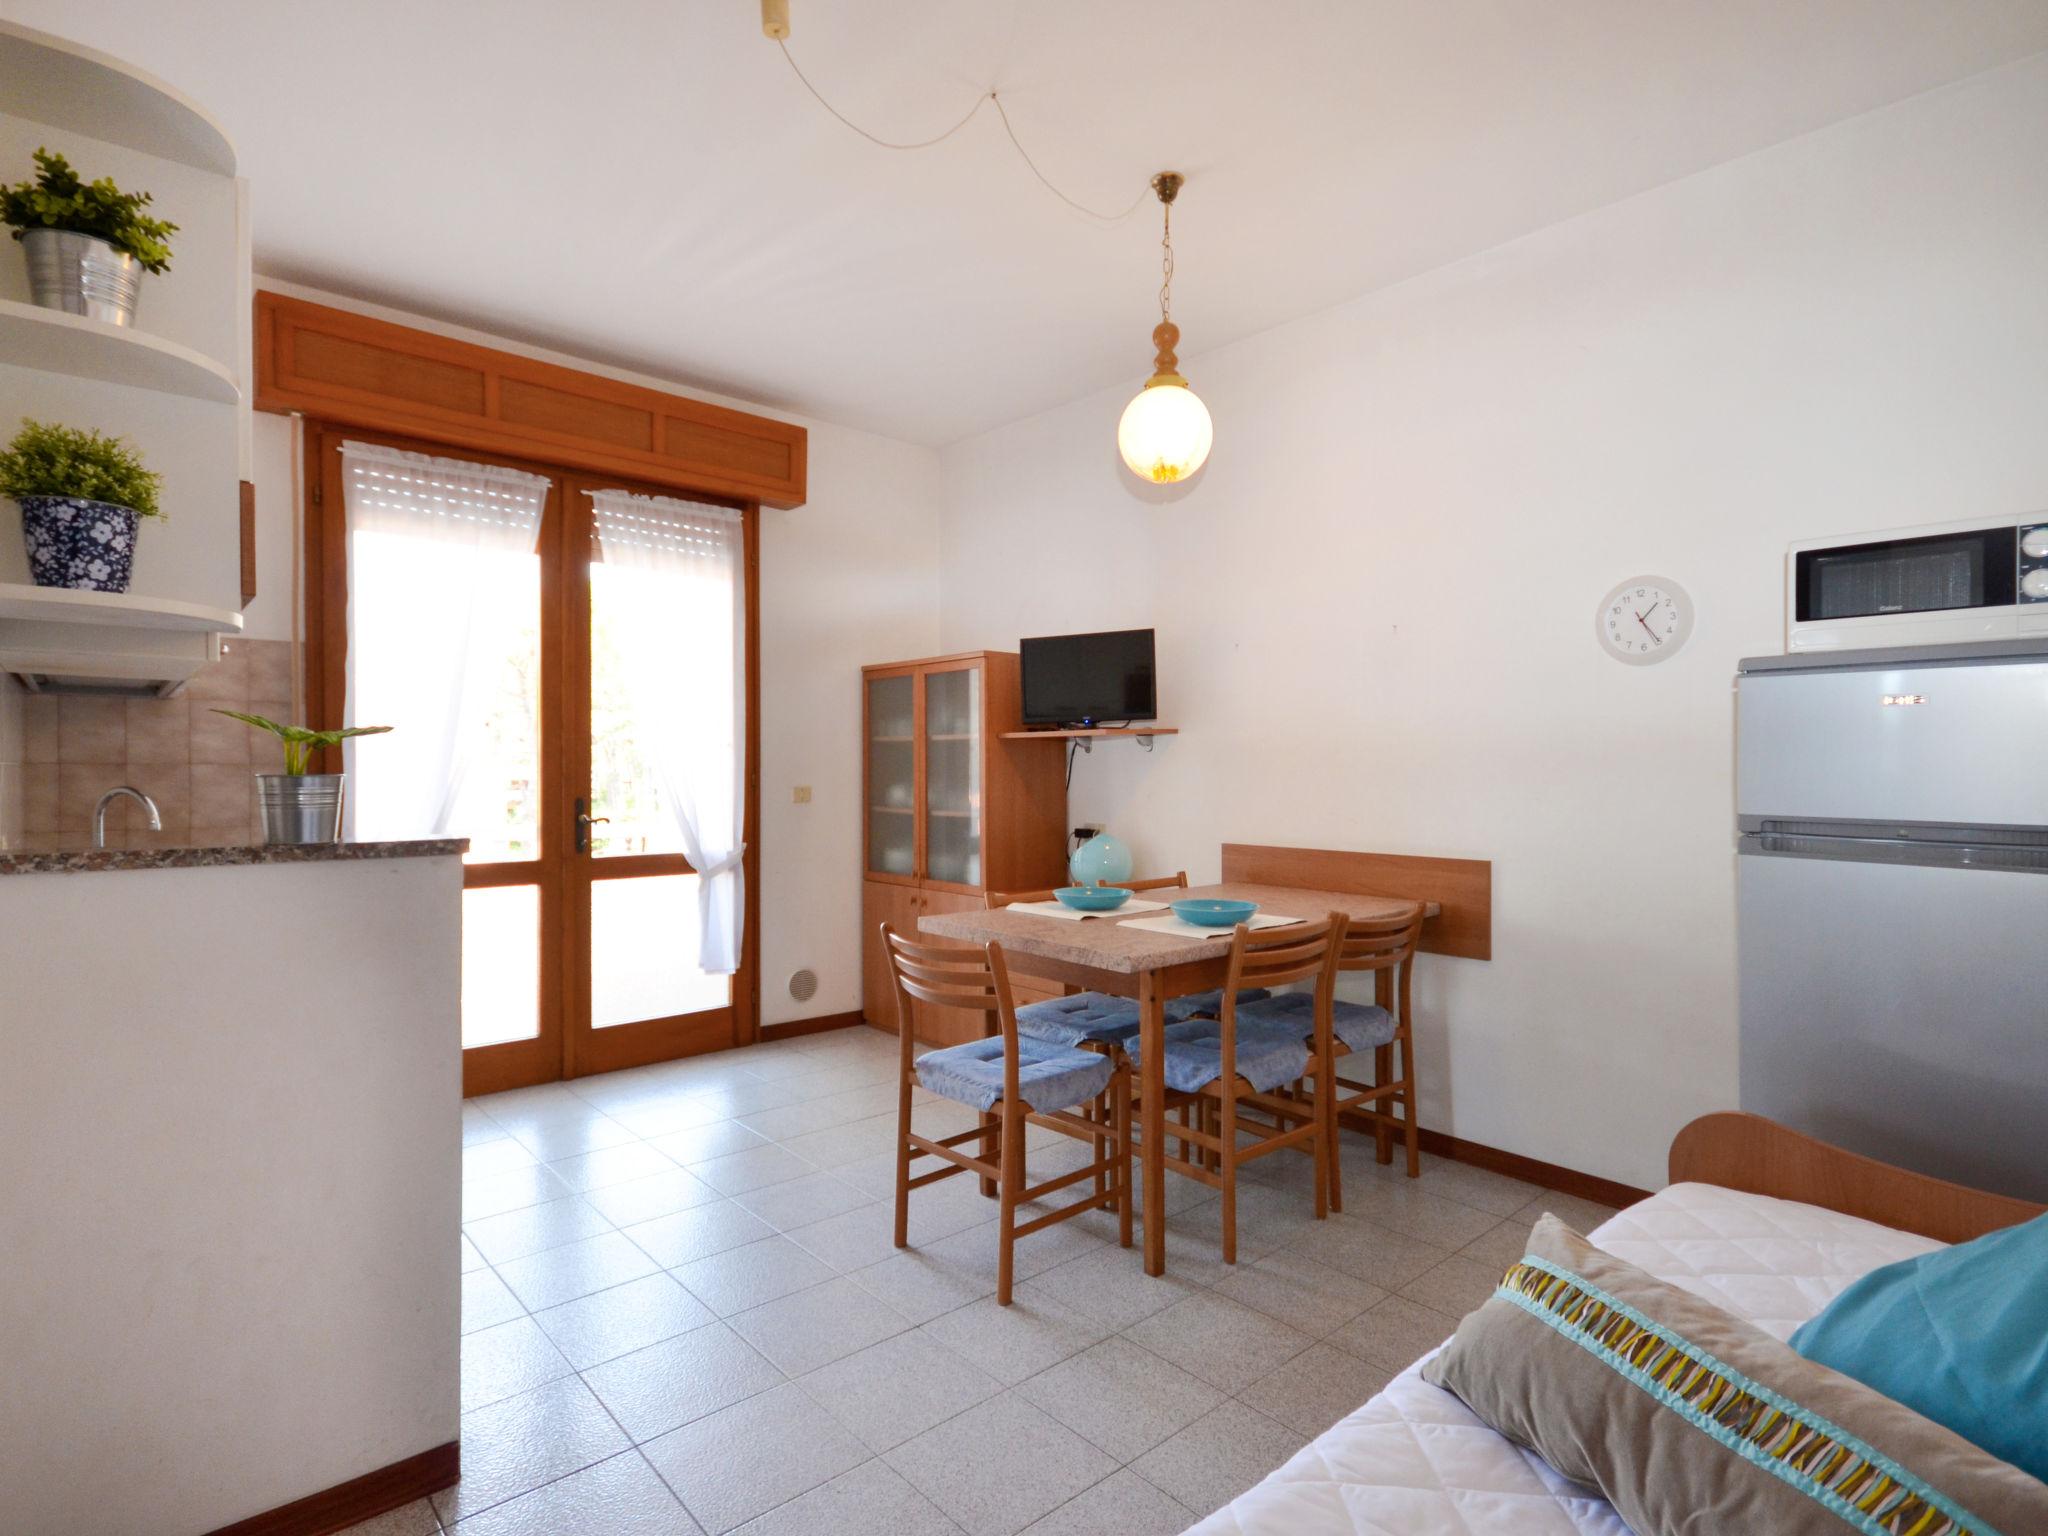 Photo 9 - Appartement de 2 chambres à Lignano Sabbiadoro avec piscine et vues à la mer